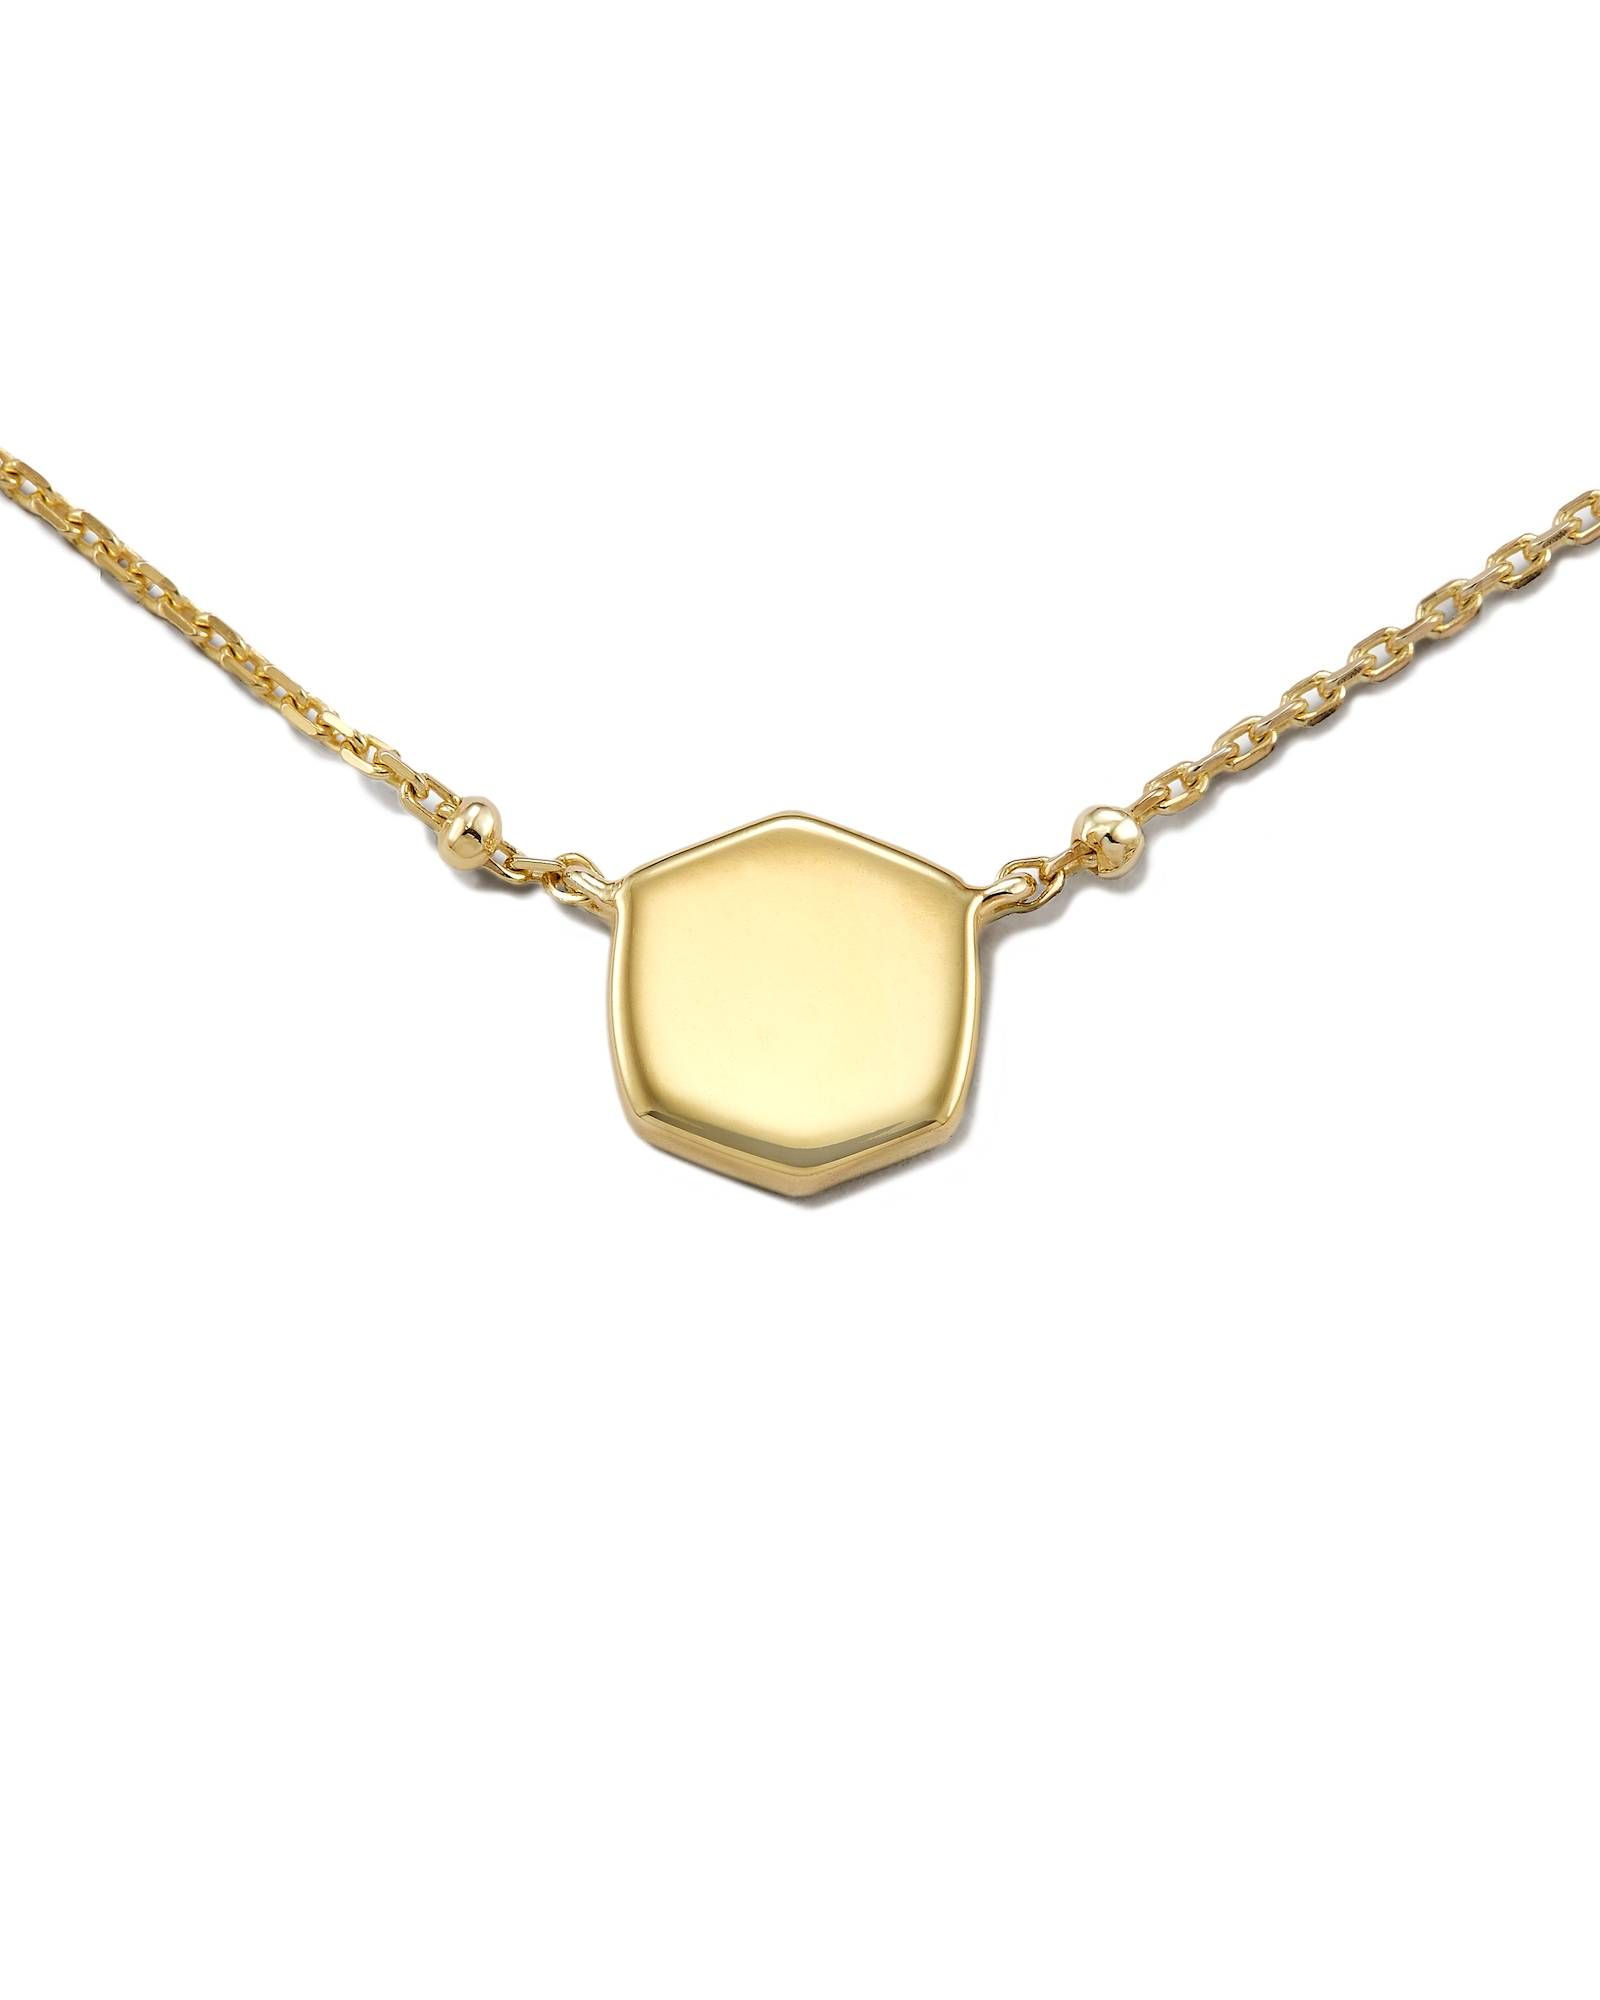 Davis Satellite Pendant Necklace in 18k Gold Vermeil | Kendra Scott | Kendra Scott